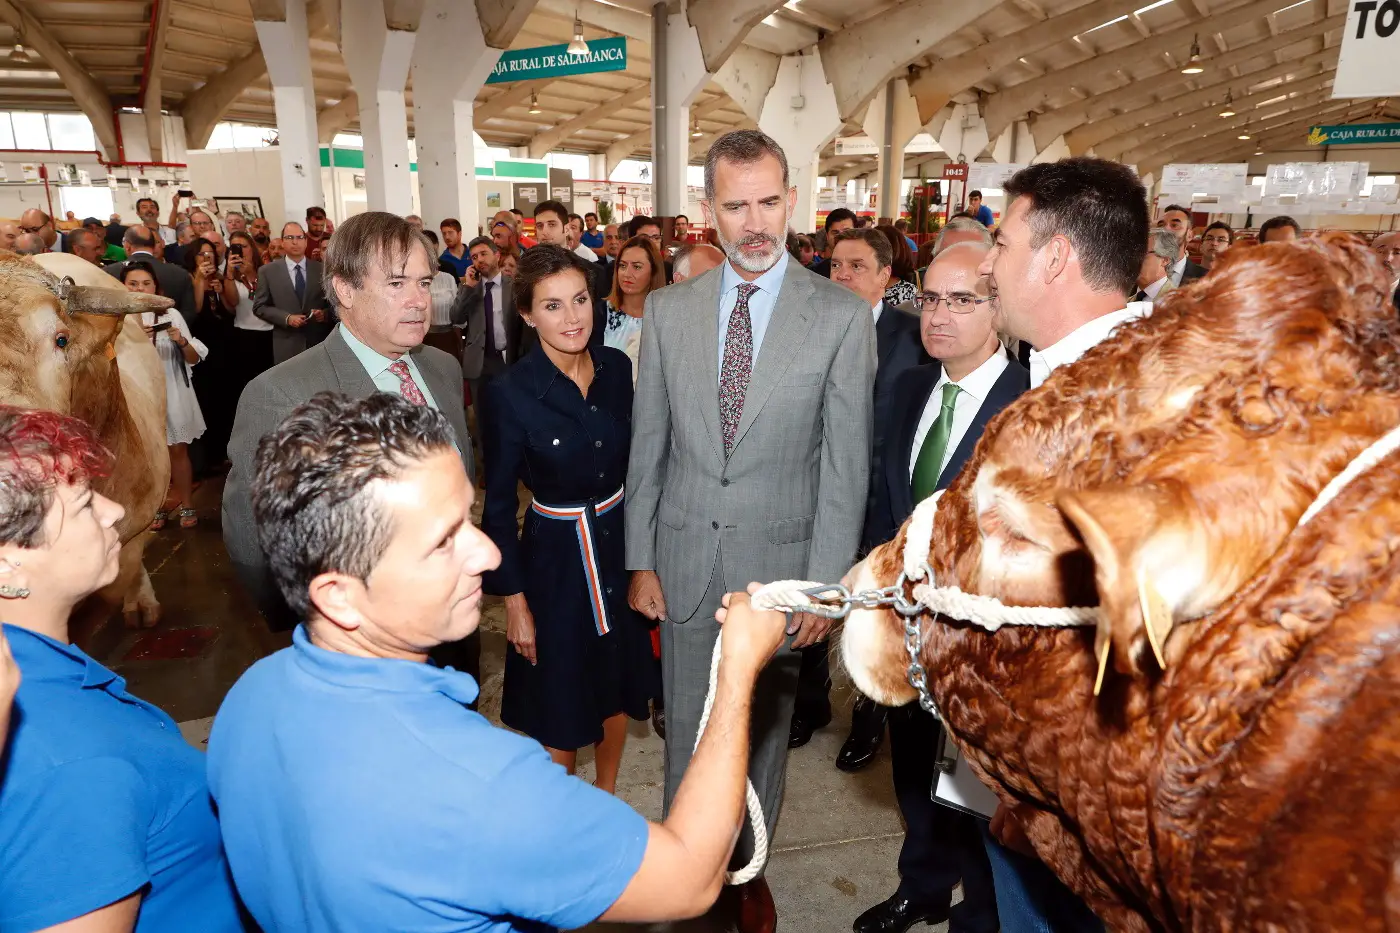 King Felipe and Queen Letizia at the inauguration of Salmanca Agricultural Fair 2018